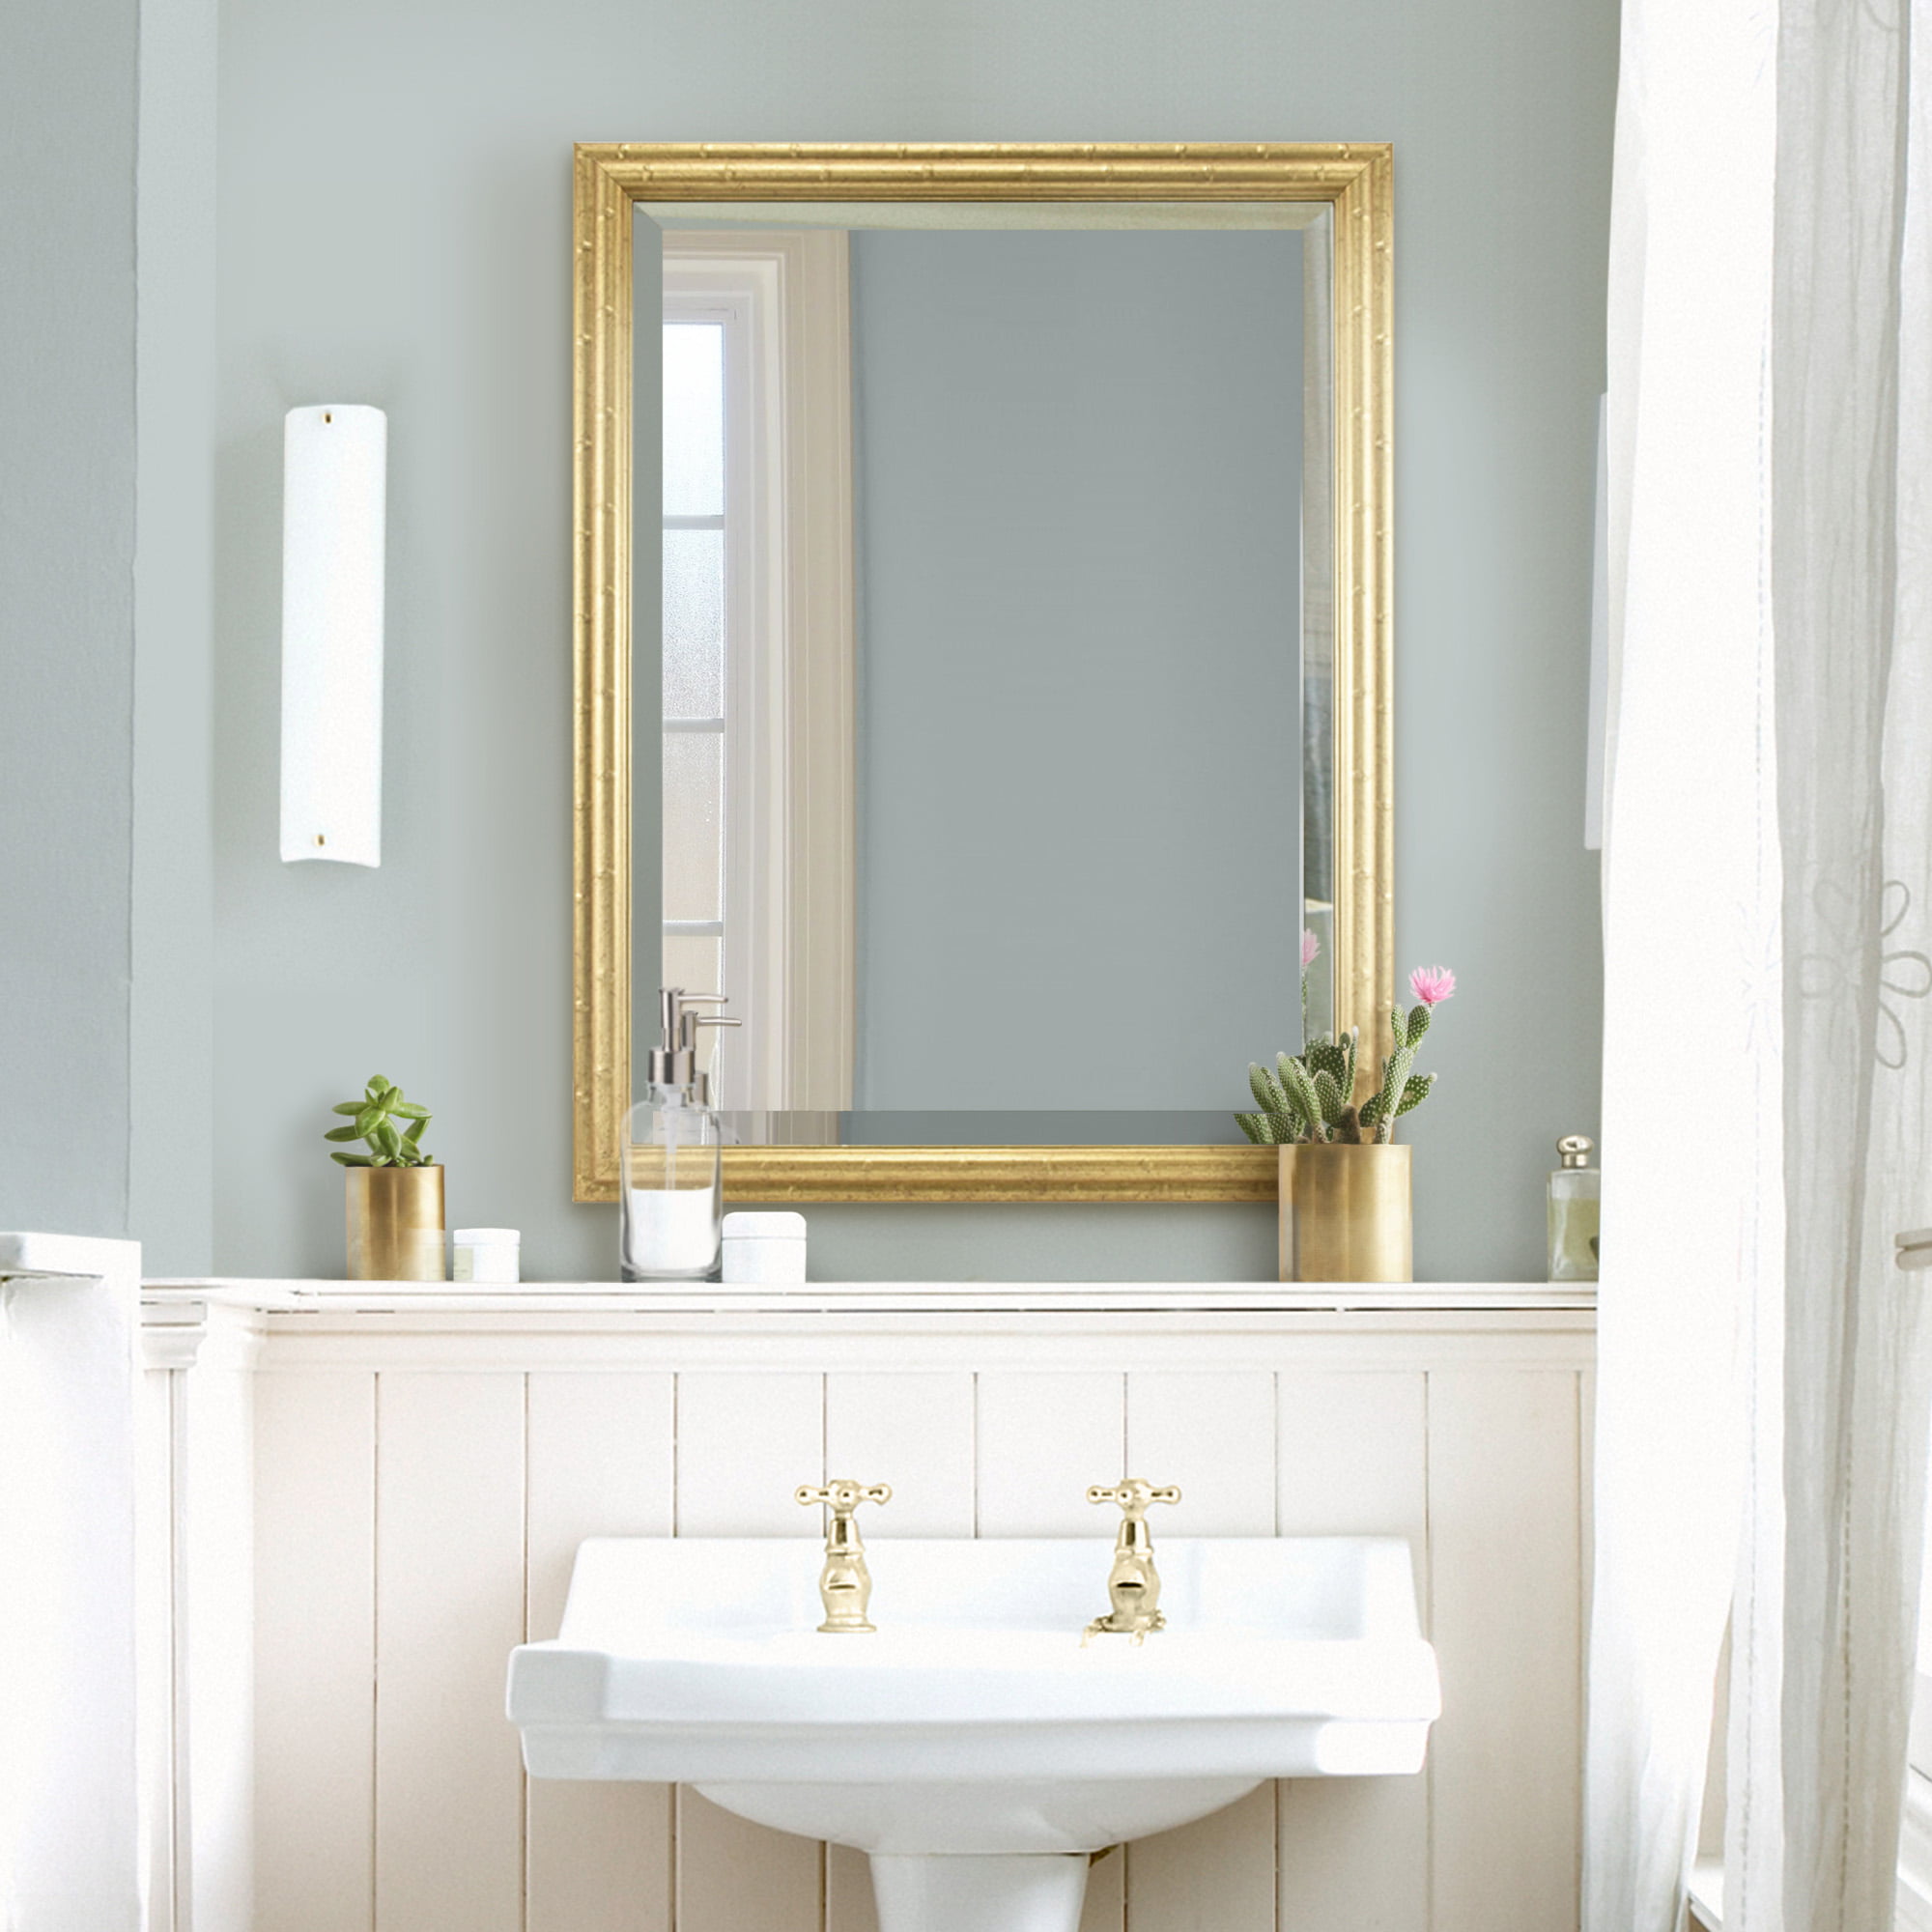 Decor Steal Oil Rubbed Bronze Bathroom Mirror With Shelf